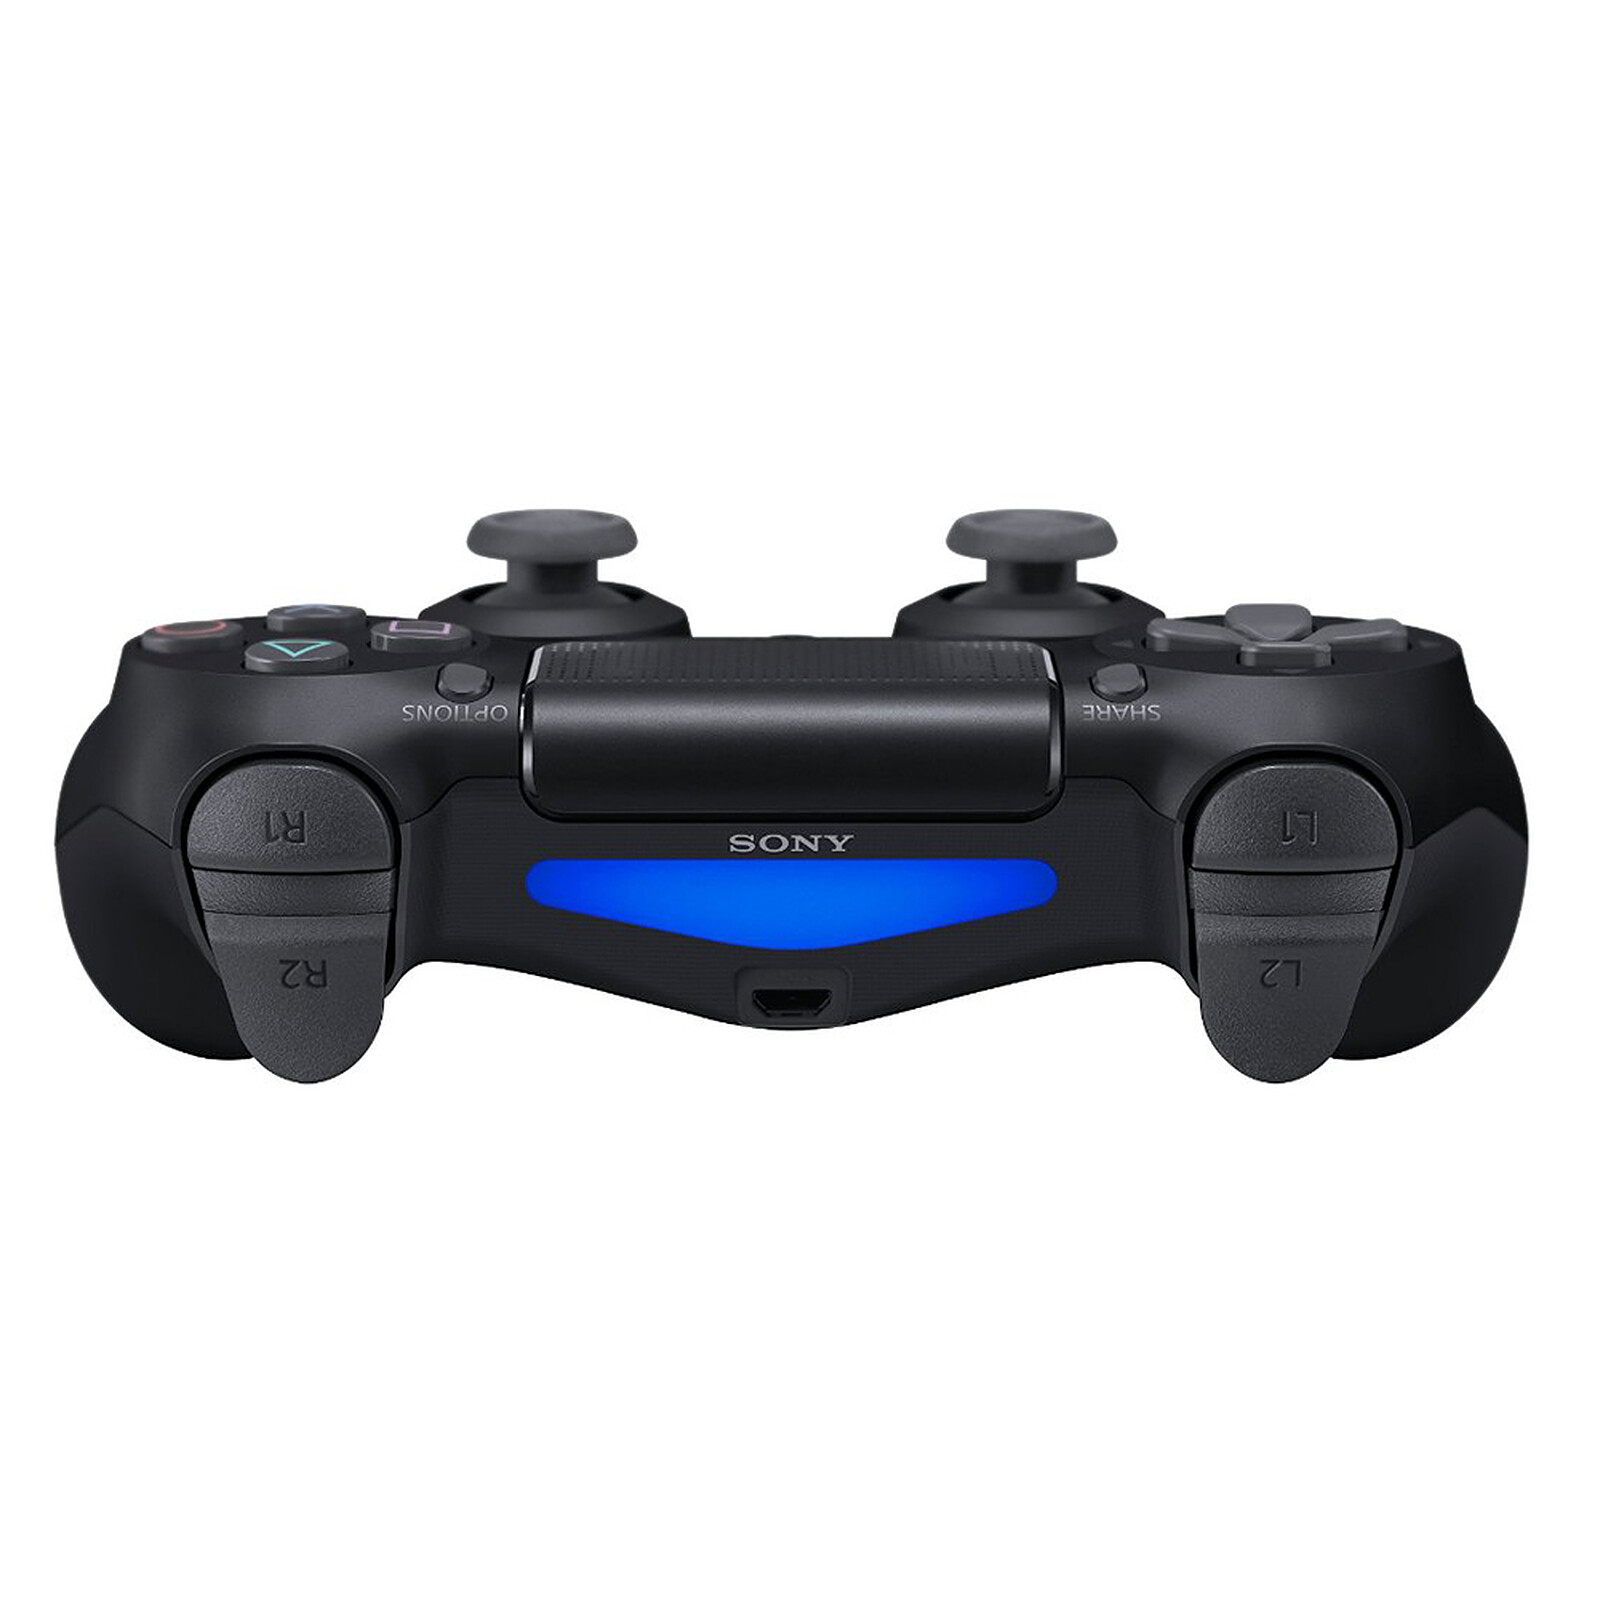 Sony DualShock 4 v2 (noire) + PlayStation 4 DualShock USB Adapter for PC/Mac  - Manette PC - Garantie 3 ans LDLC